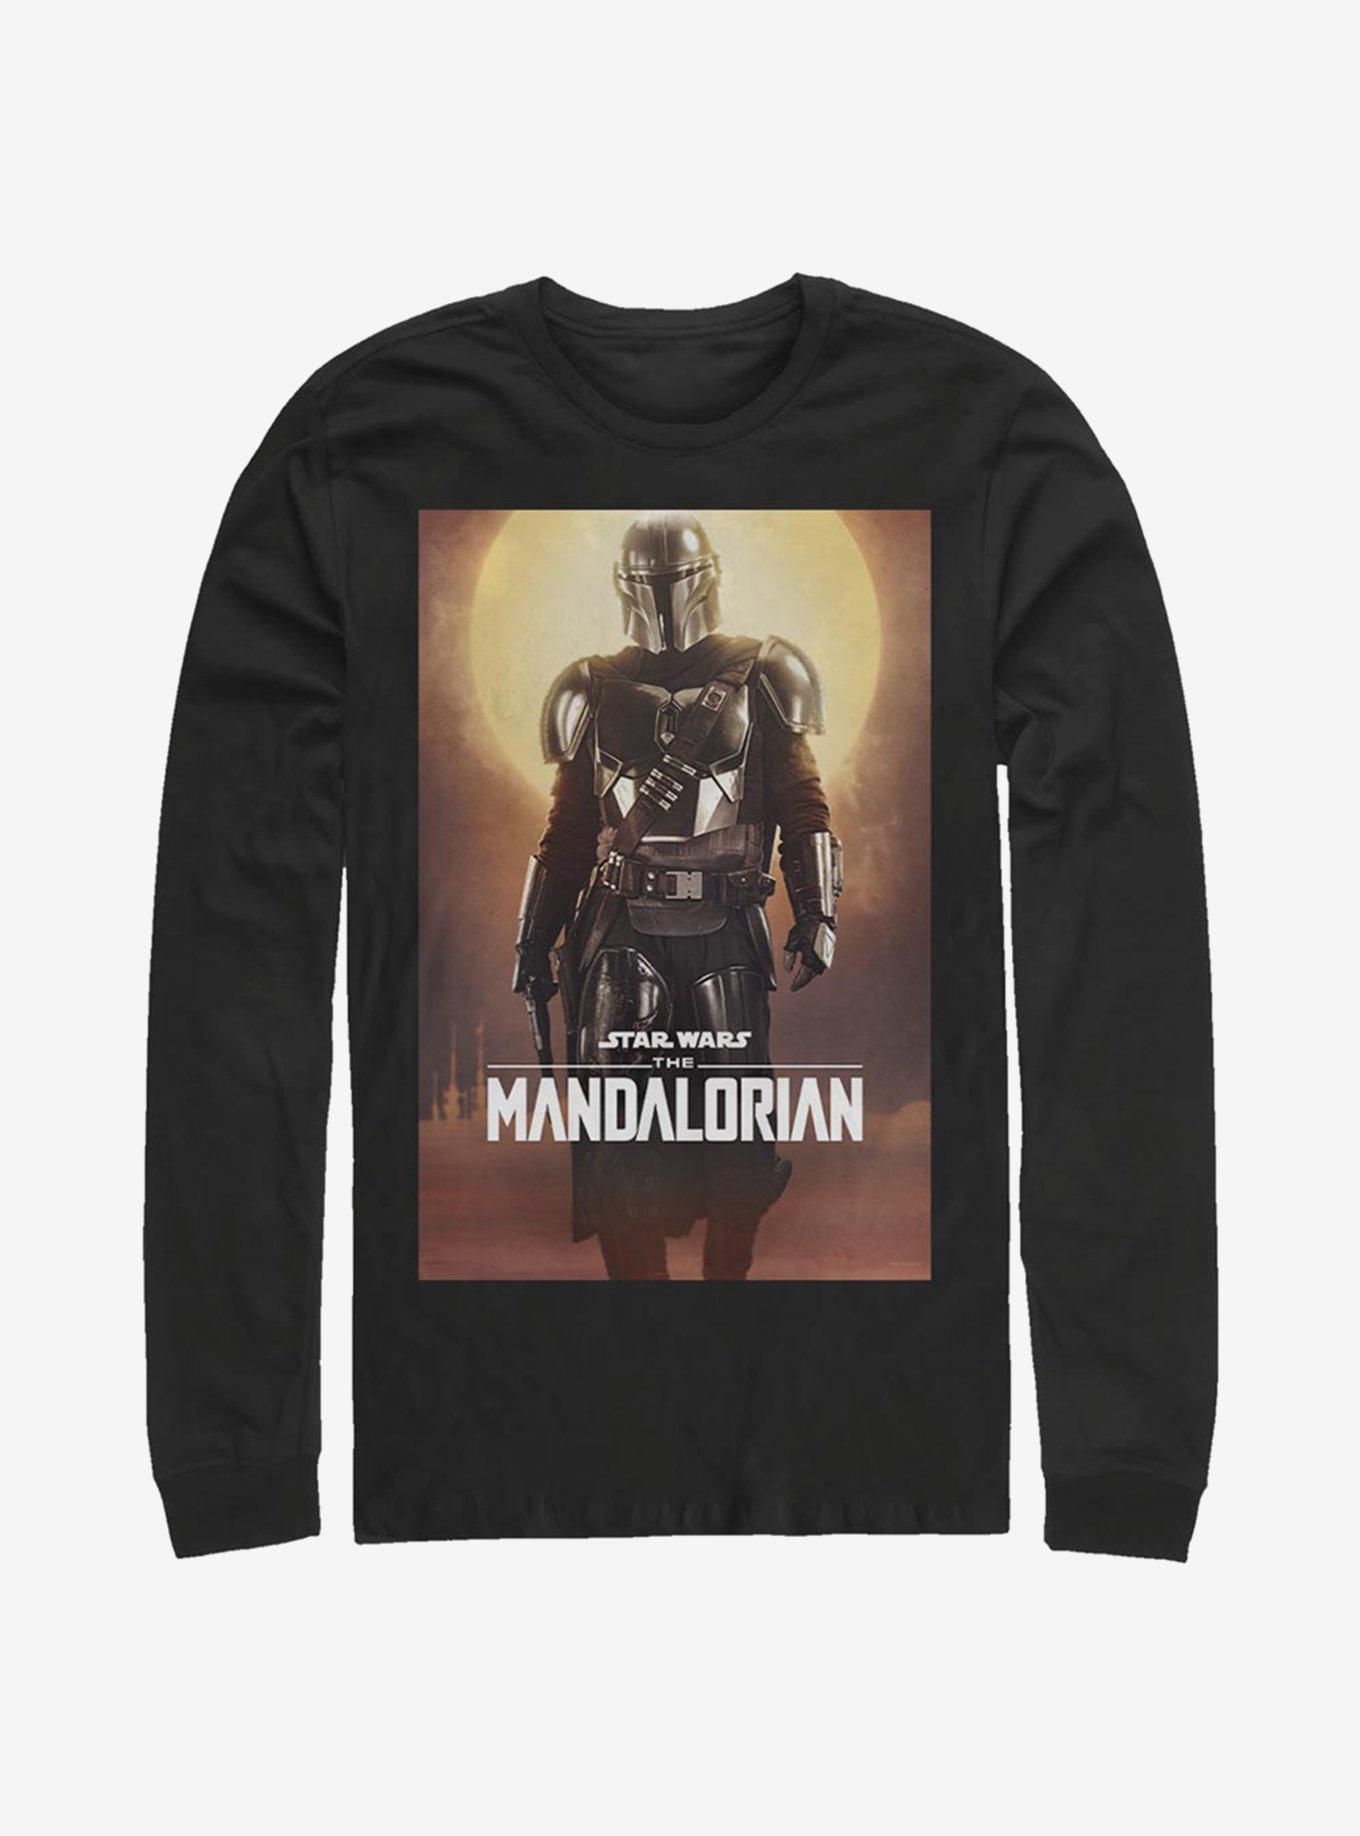 Star Wars The Mandalorian Main Poster Long-Sleeve T-Shirt, BLACK, hi-res